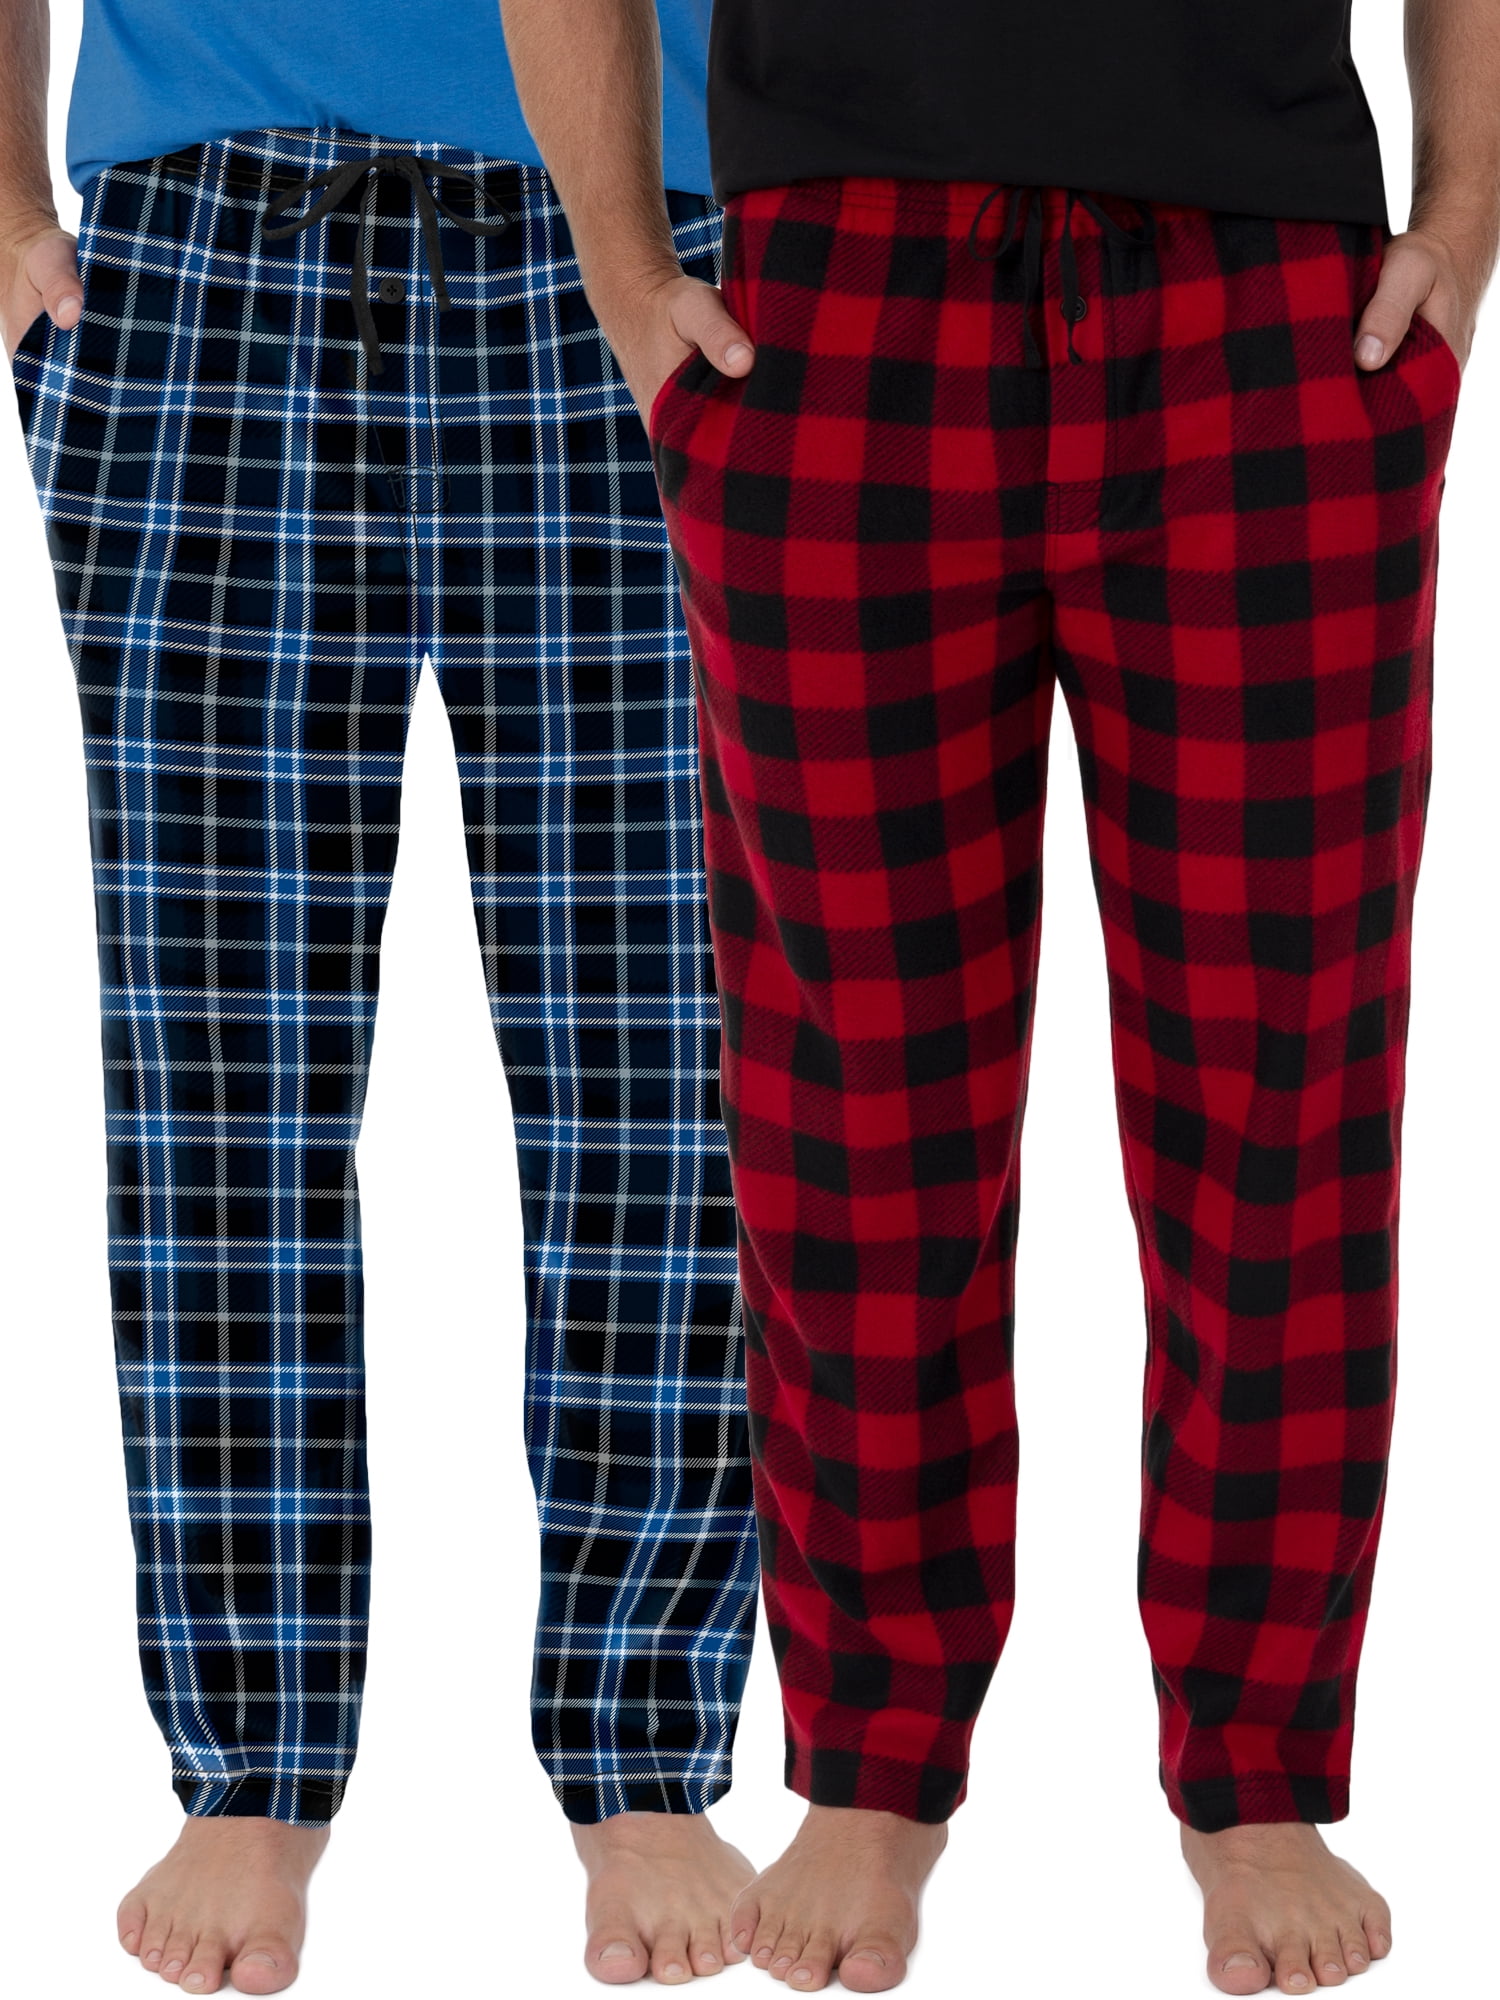 Fruit of the Loom Plaid Pockets Elastic Waistband Pajamas (Men's), 2 ...